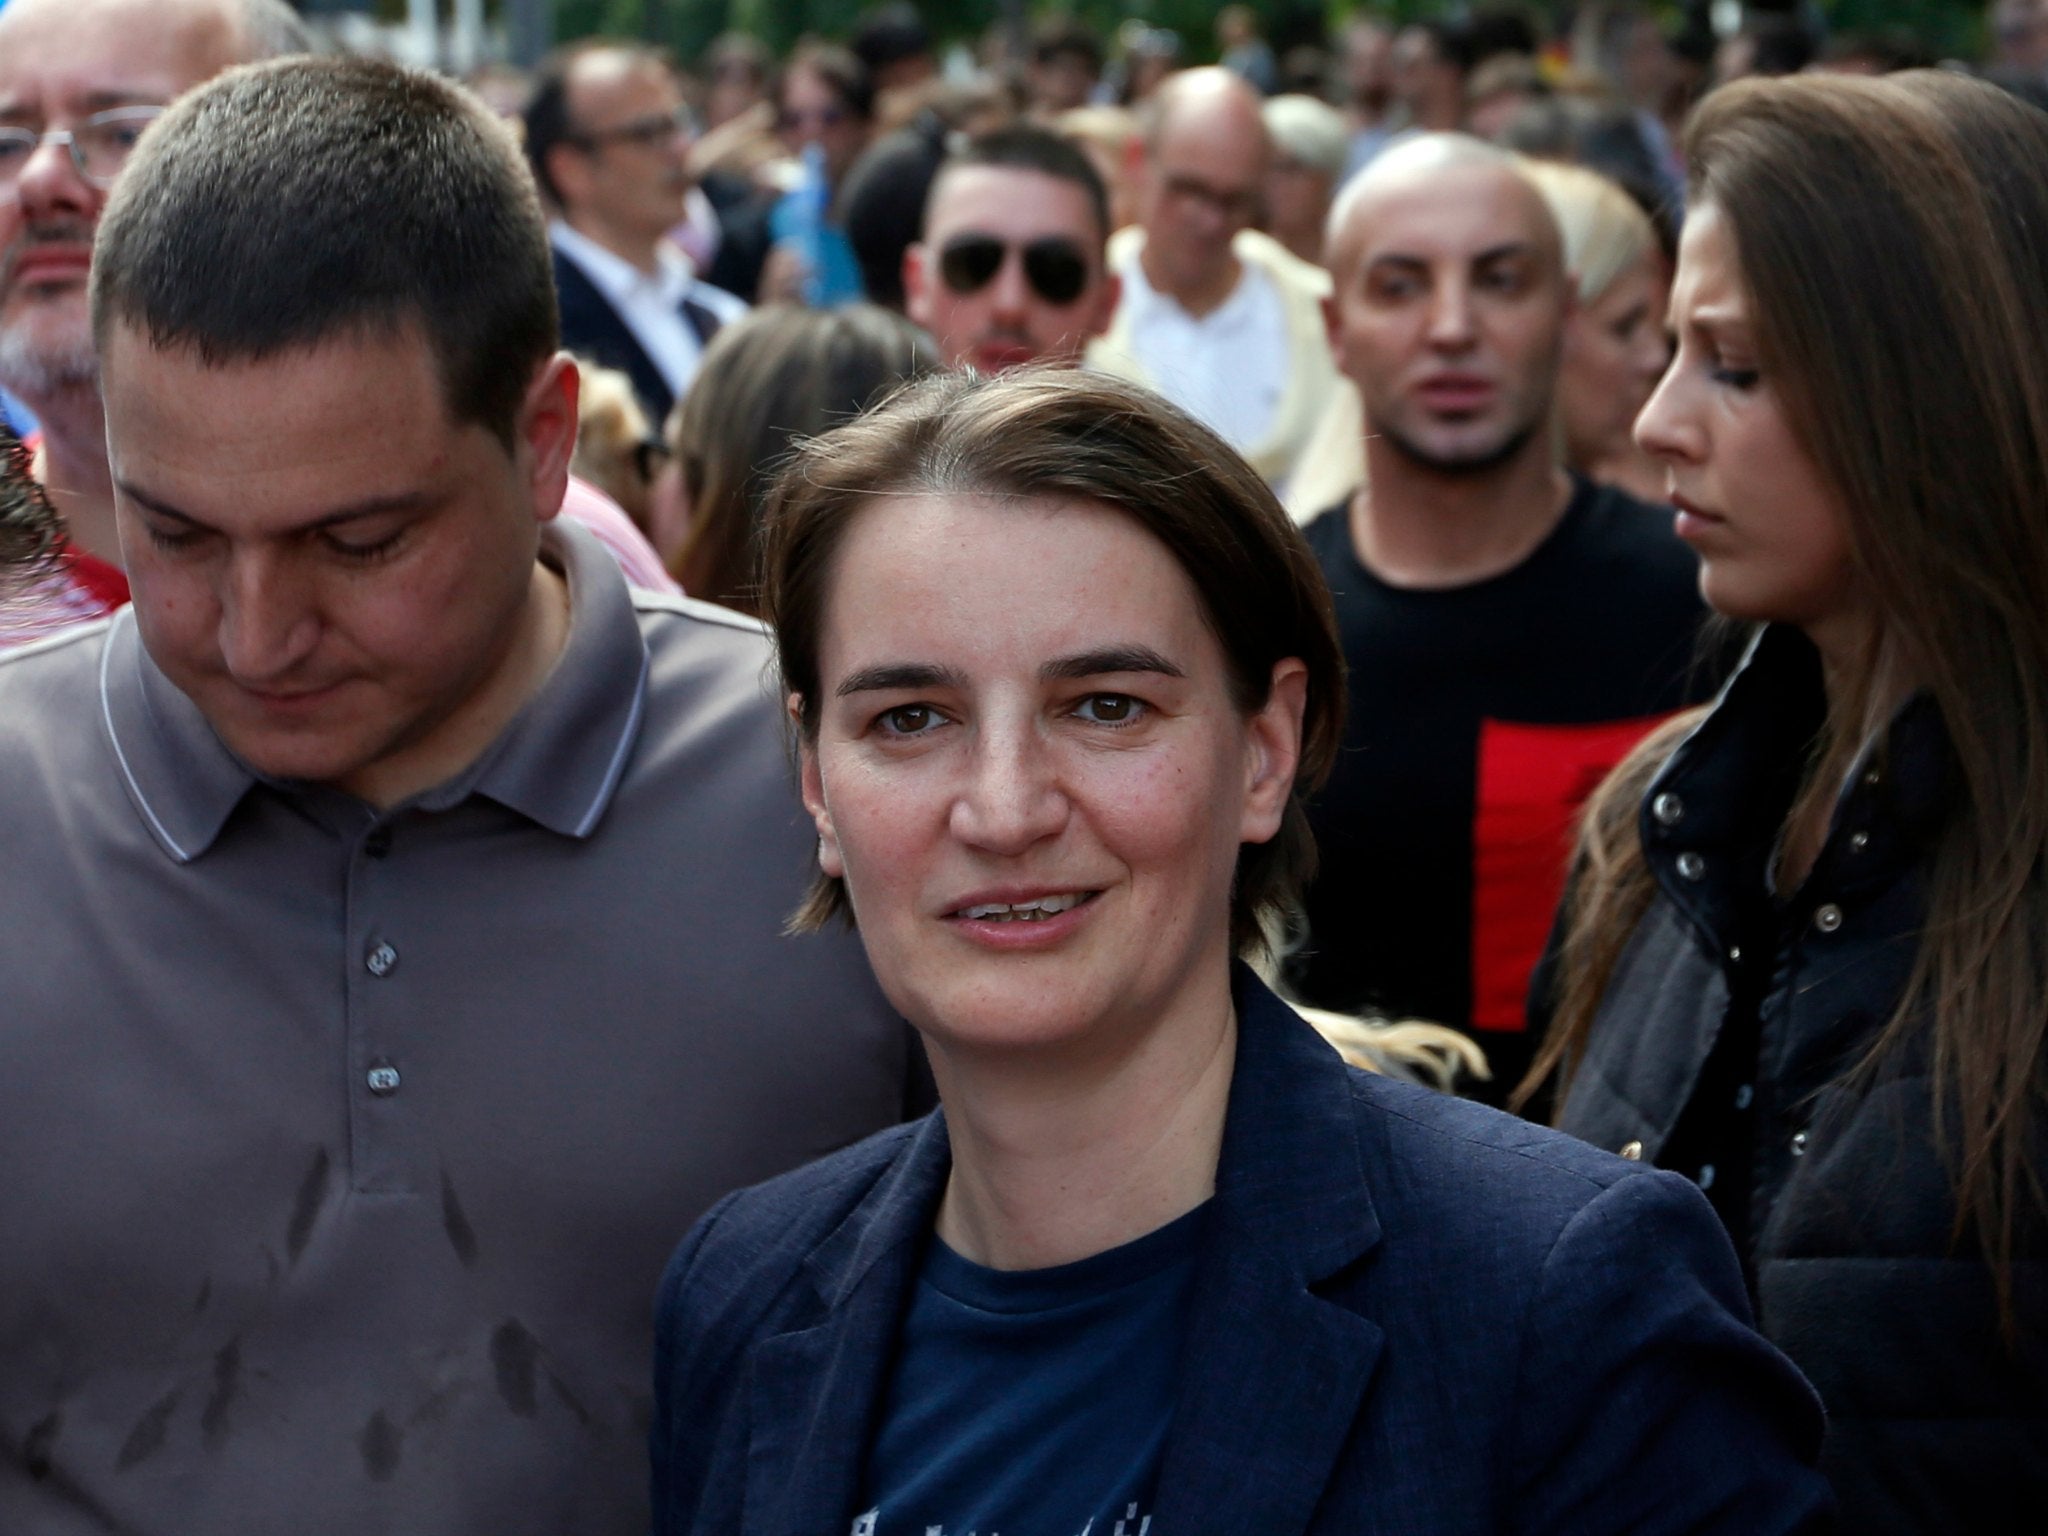 Serbia's Prime Minister, Ana Brnabic, attends a pride march in Belgrade